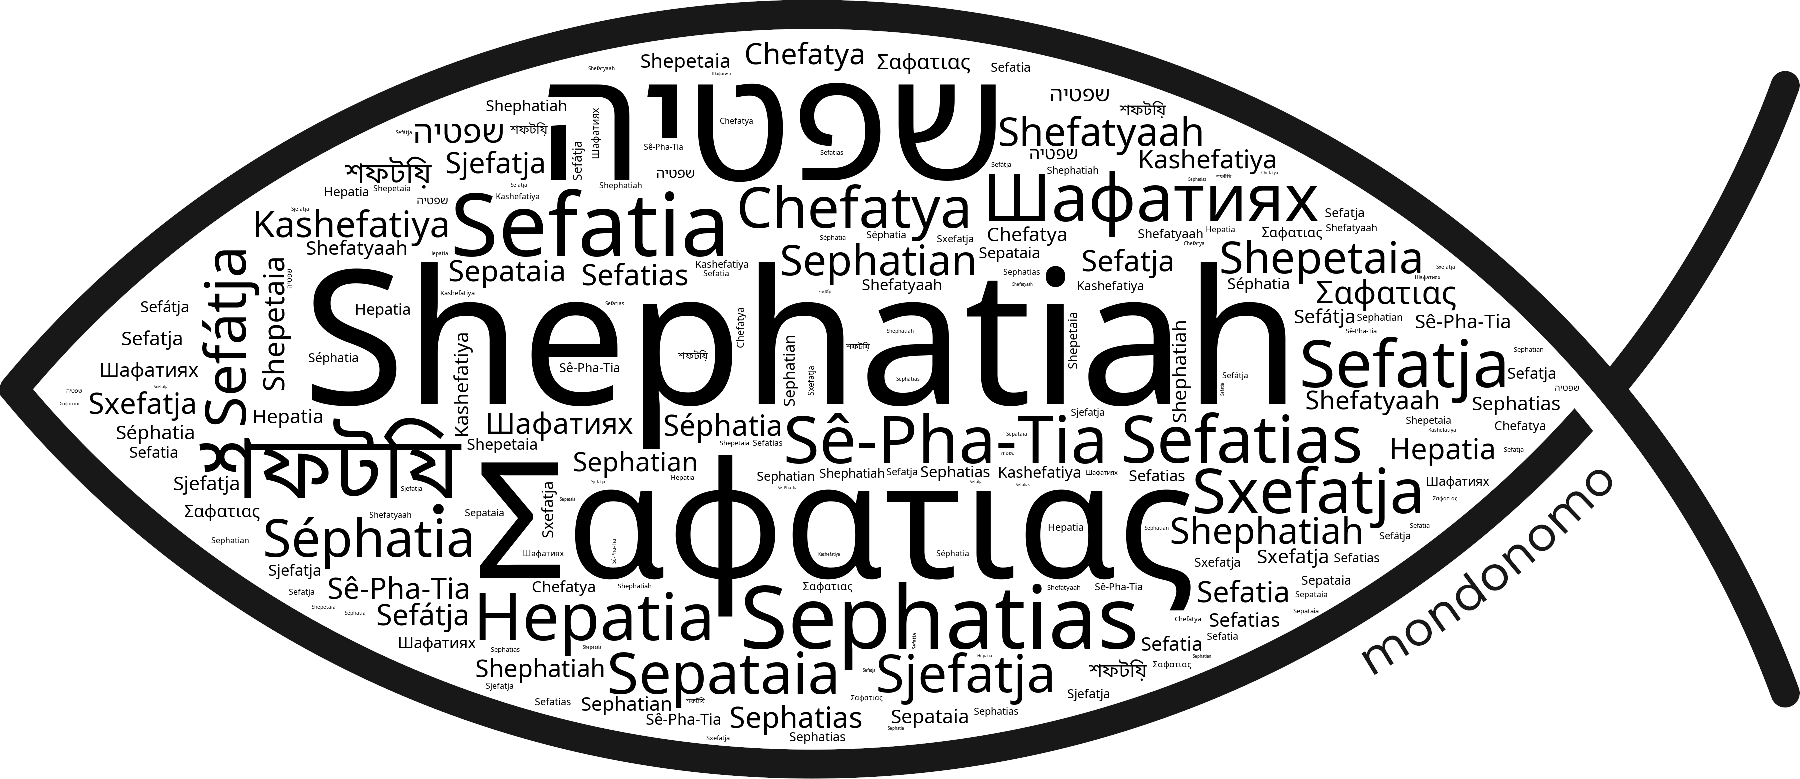 Name Shephatiah in the world's Bibles